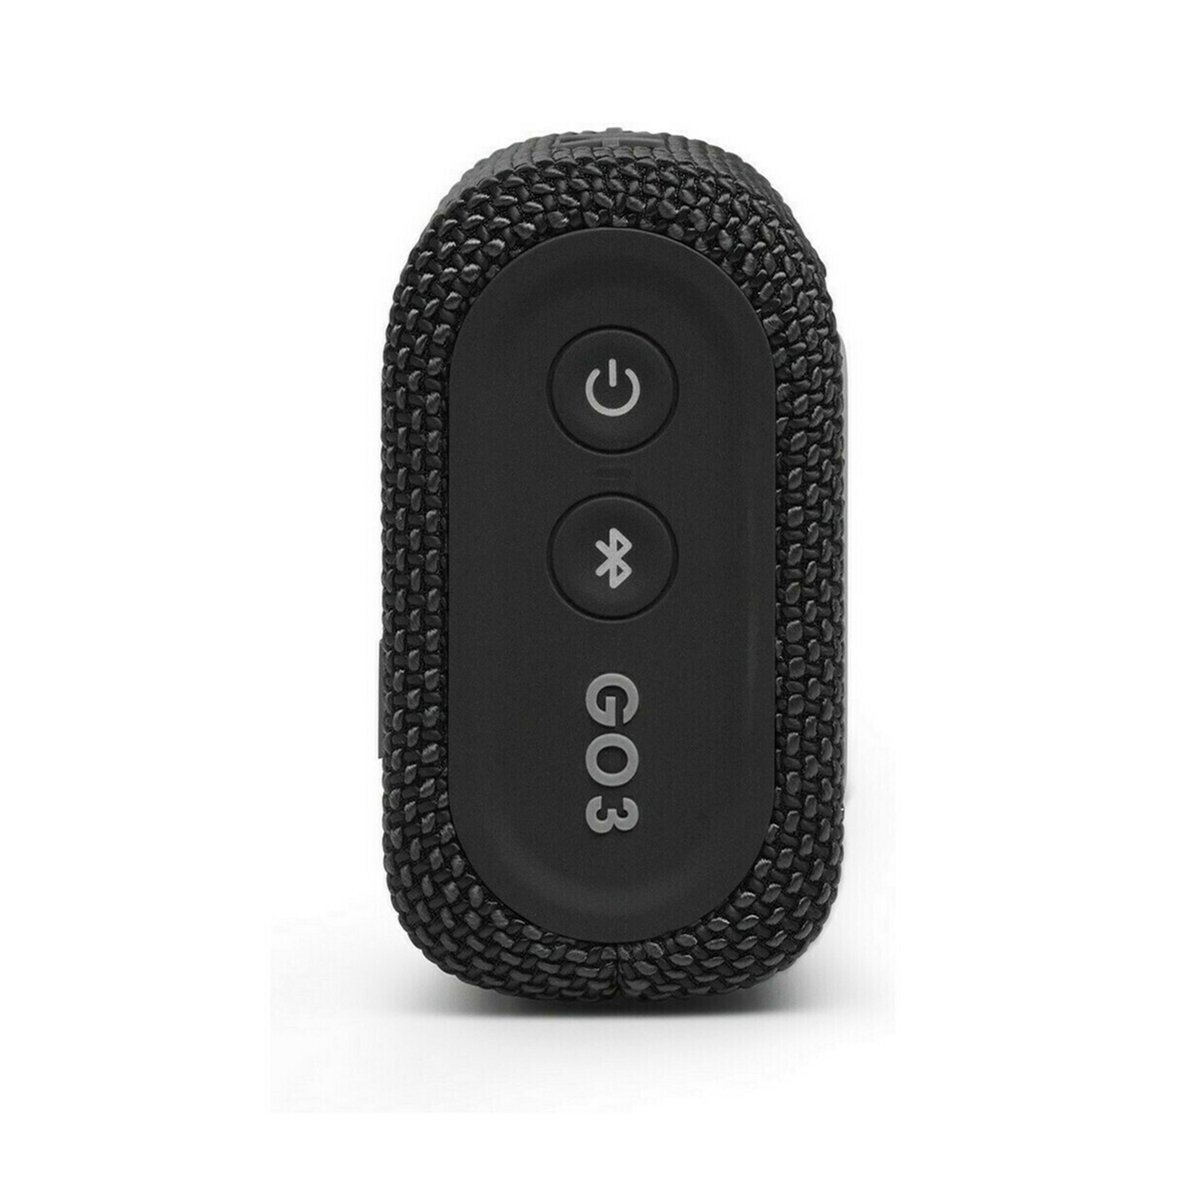 JBL Portable Bluetooth Speakers JBL GO 3 Black